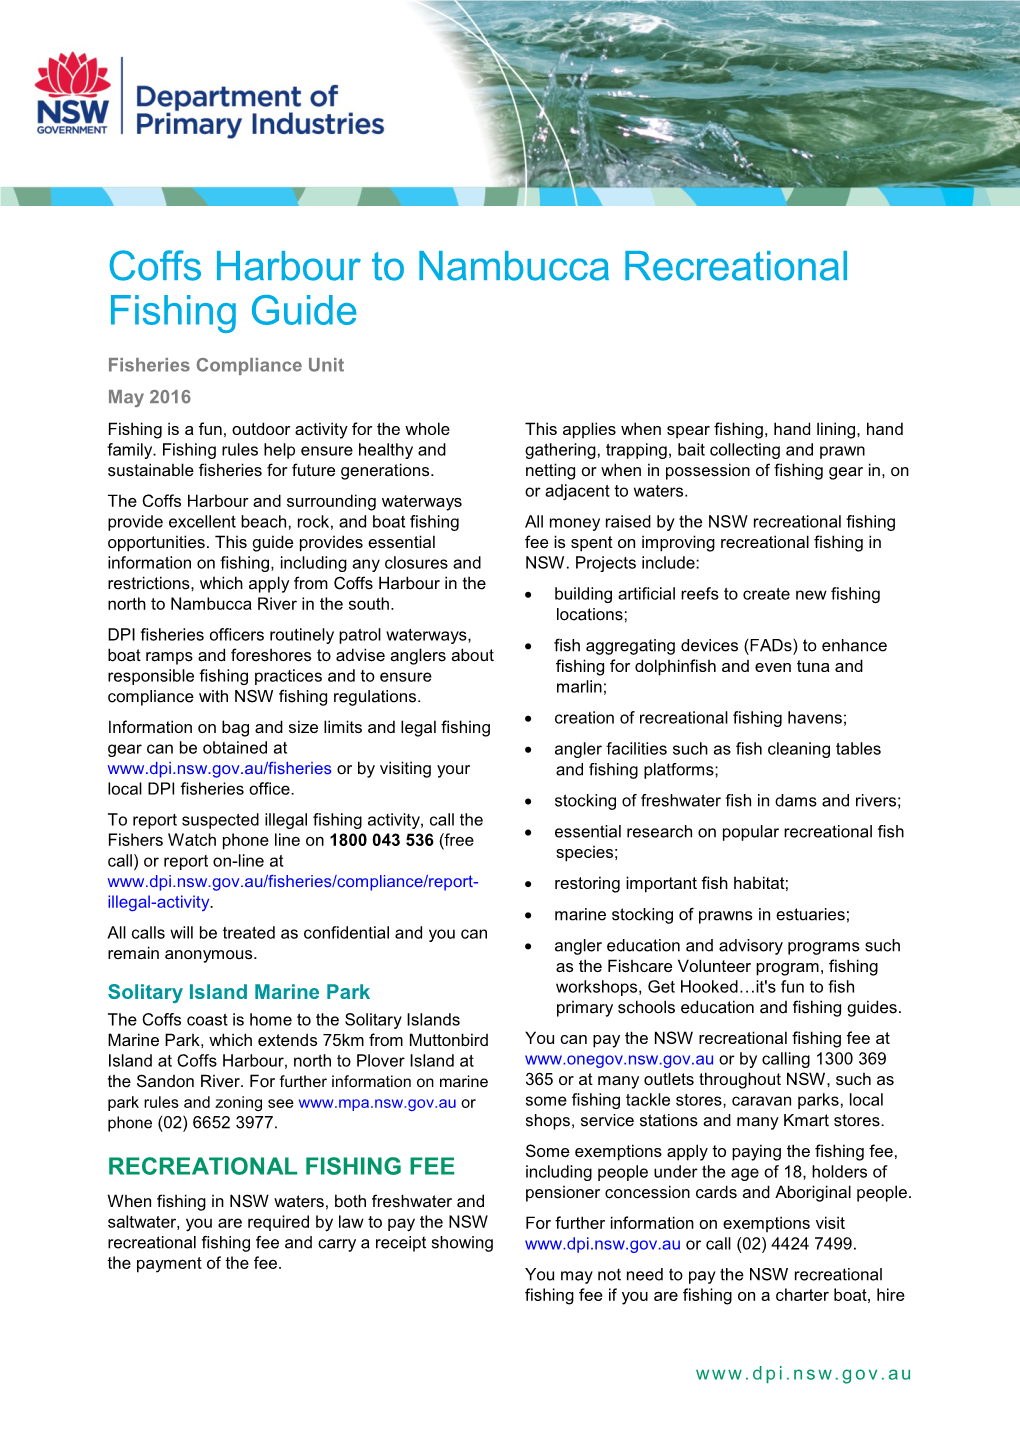 Coffs Harbour to Nambucca Recreational Fishing Guide